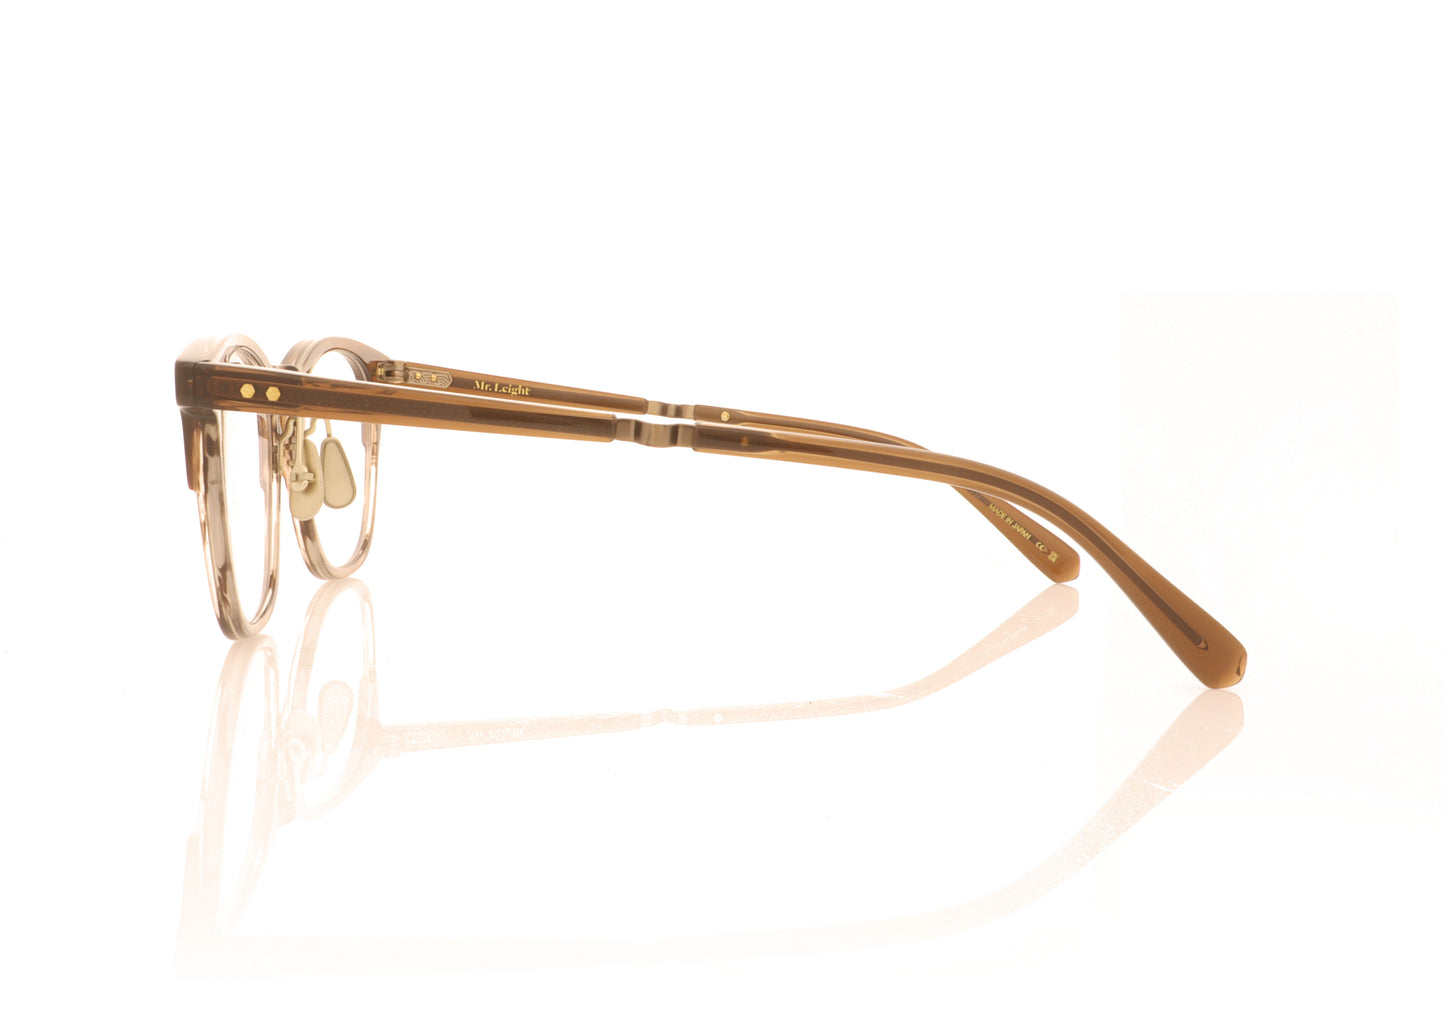 Mr. Leight Wright C MAHF Mahogany Glasses - Side